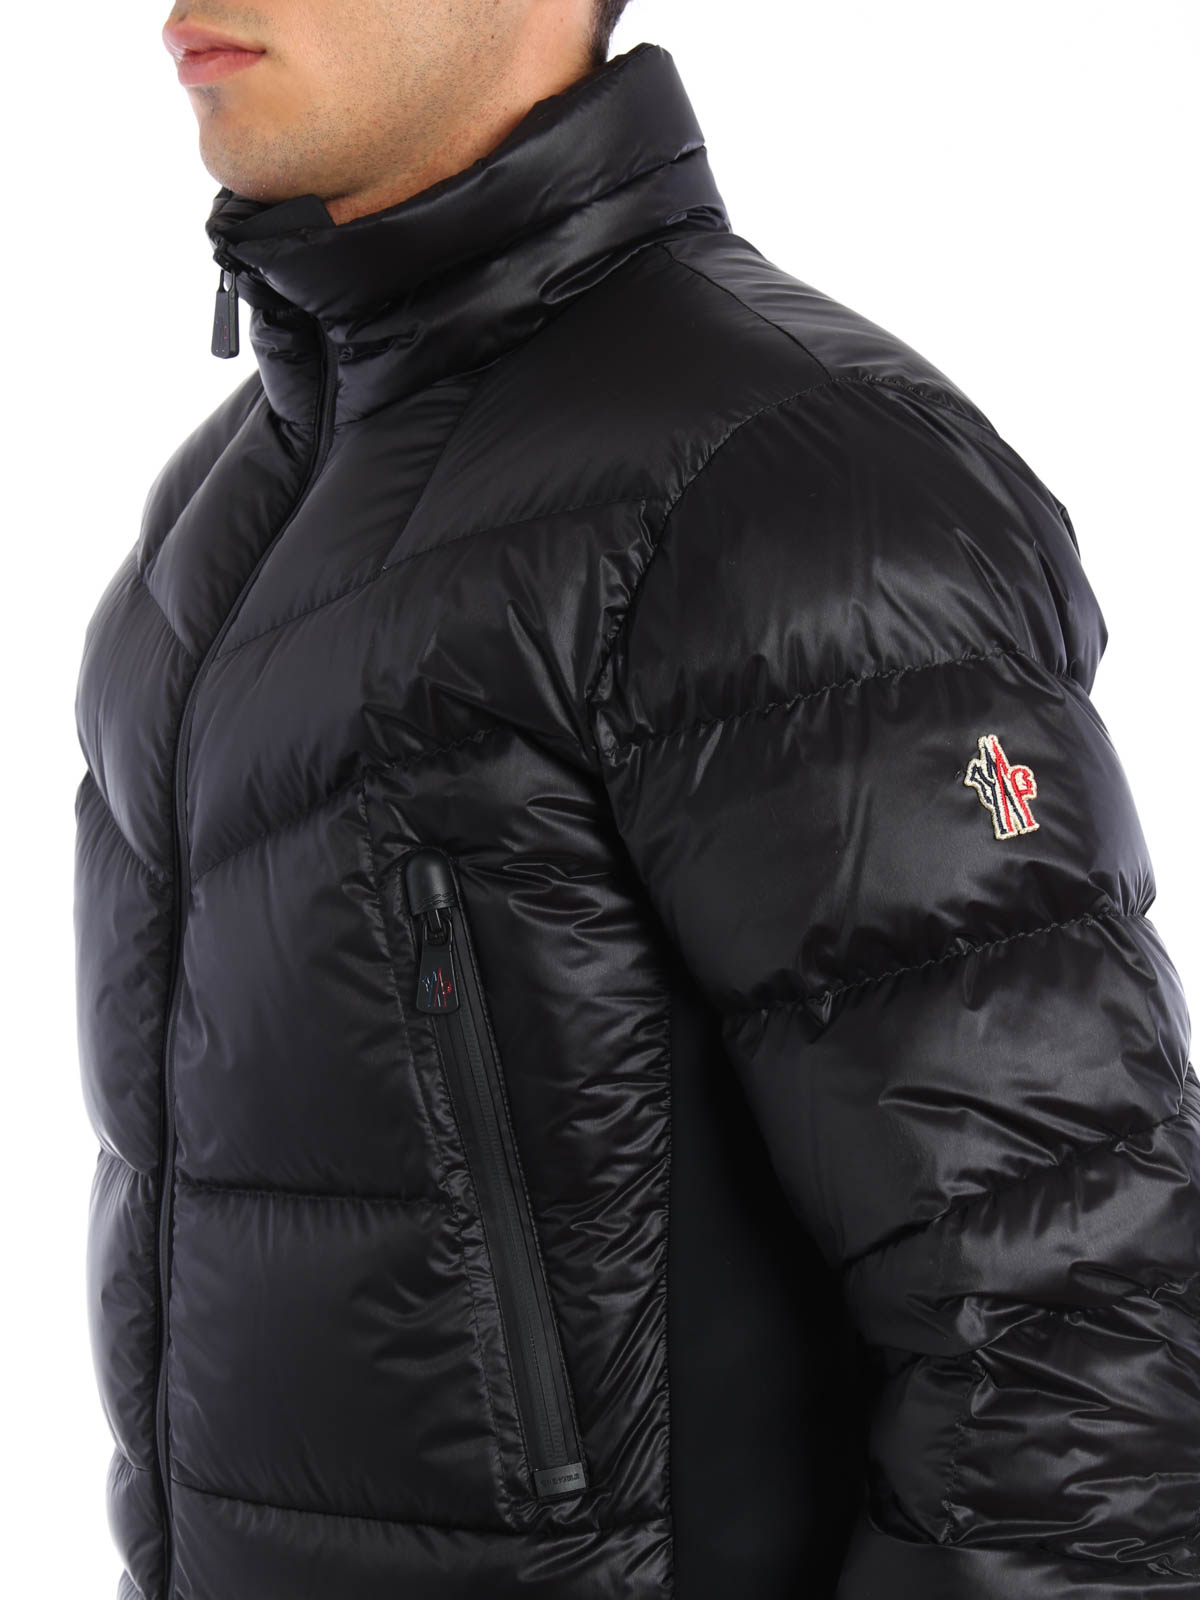 moncler canmore giubbotto jacket